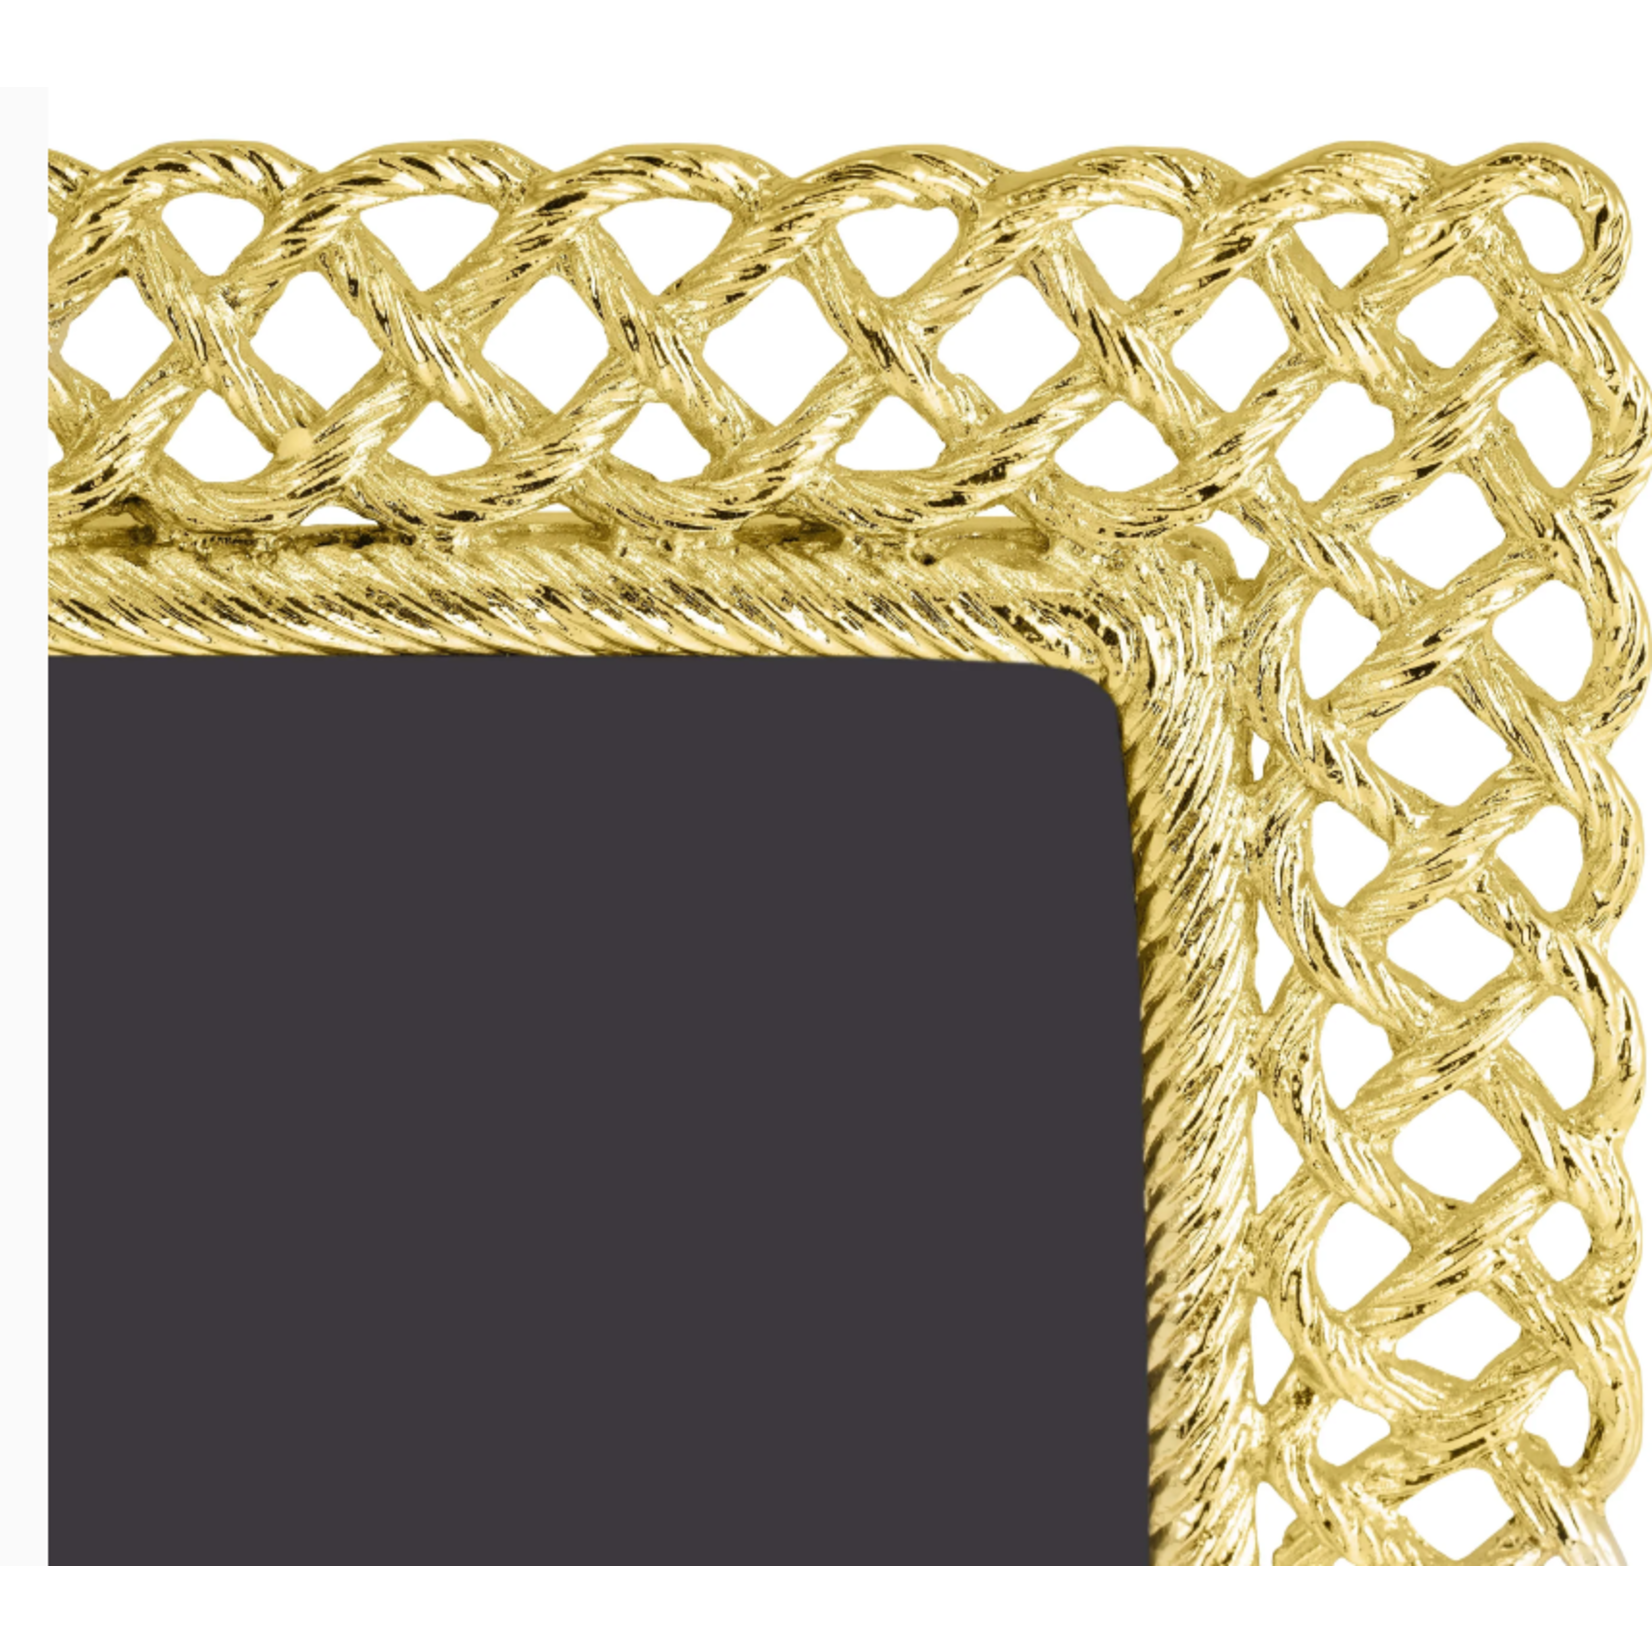 Michael Aram Love Knot Frame - Gold - 5x7